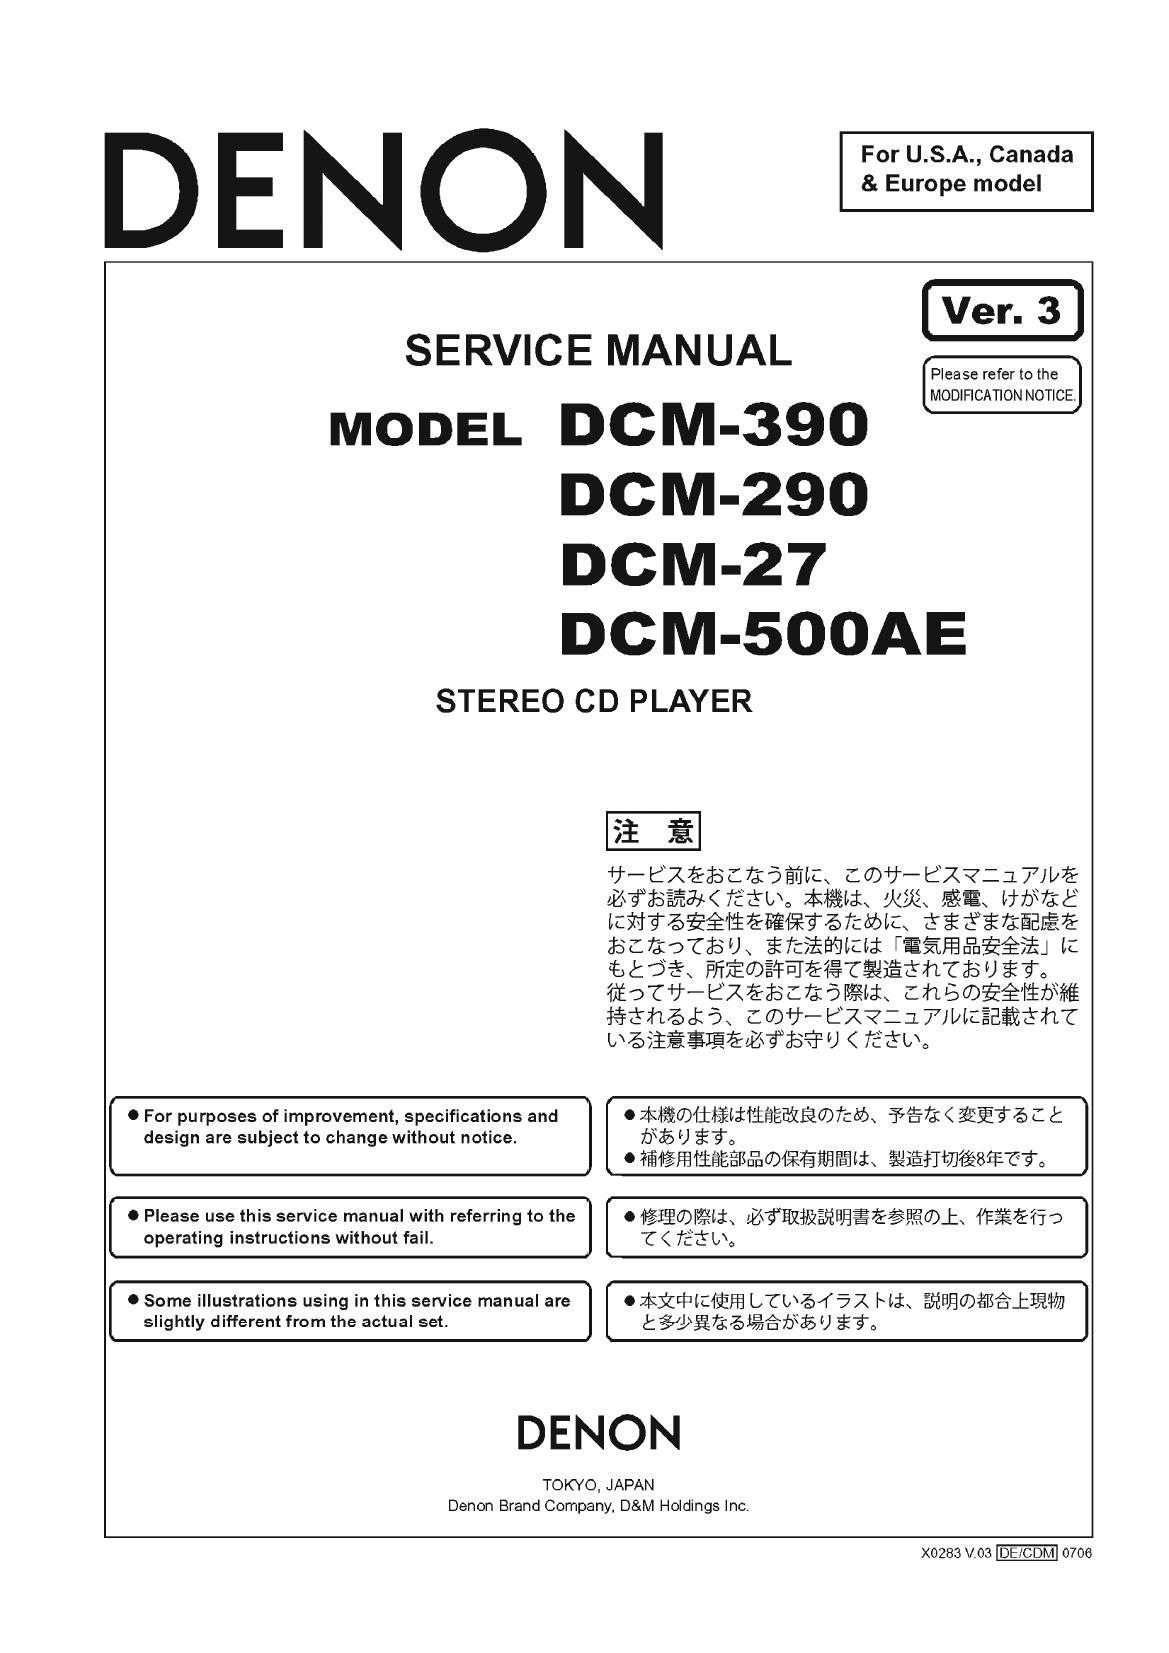 Denon DCM 500AE Service Manual